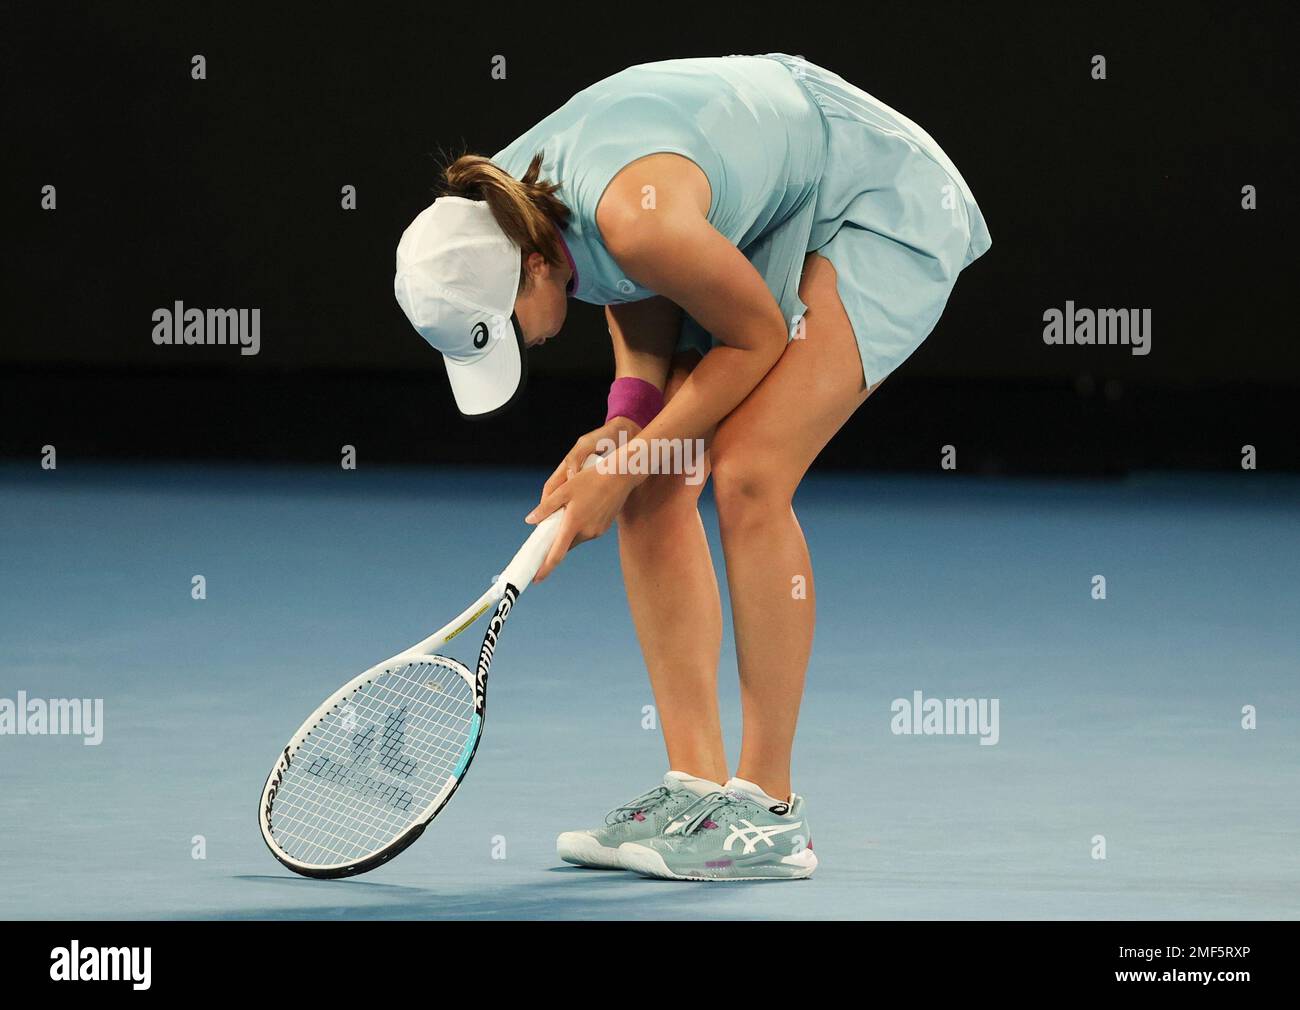 Polands Iga Swiatek reacts during her fourth round match against Romanias Simona Halep at the Australian Open tennis championship in Melbourne, Australia, Sunday, Feb